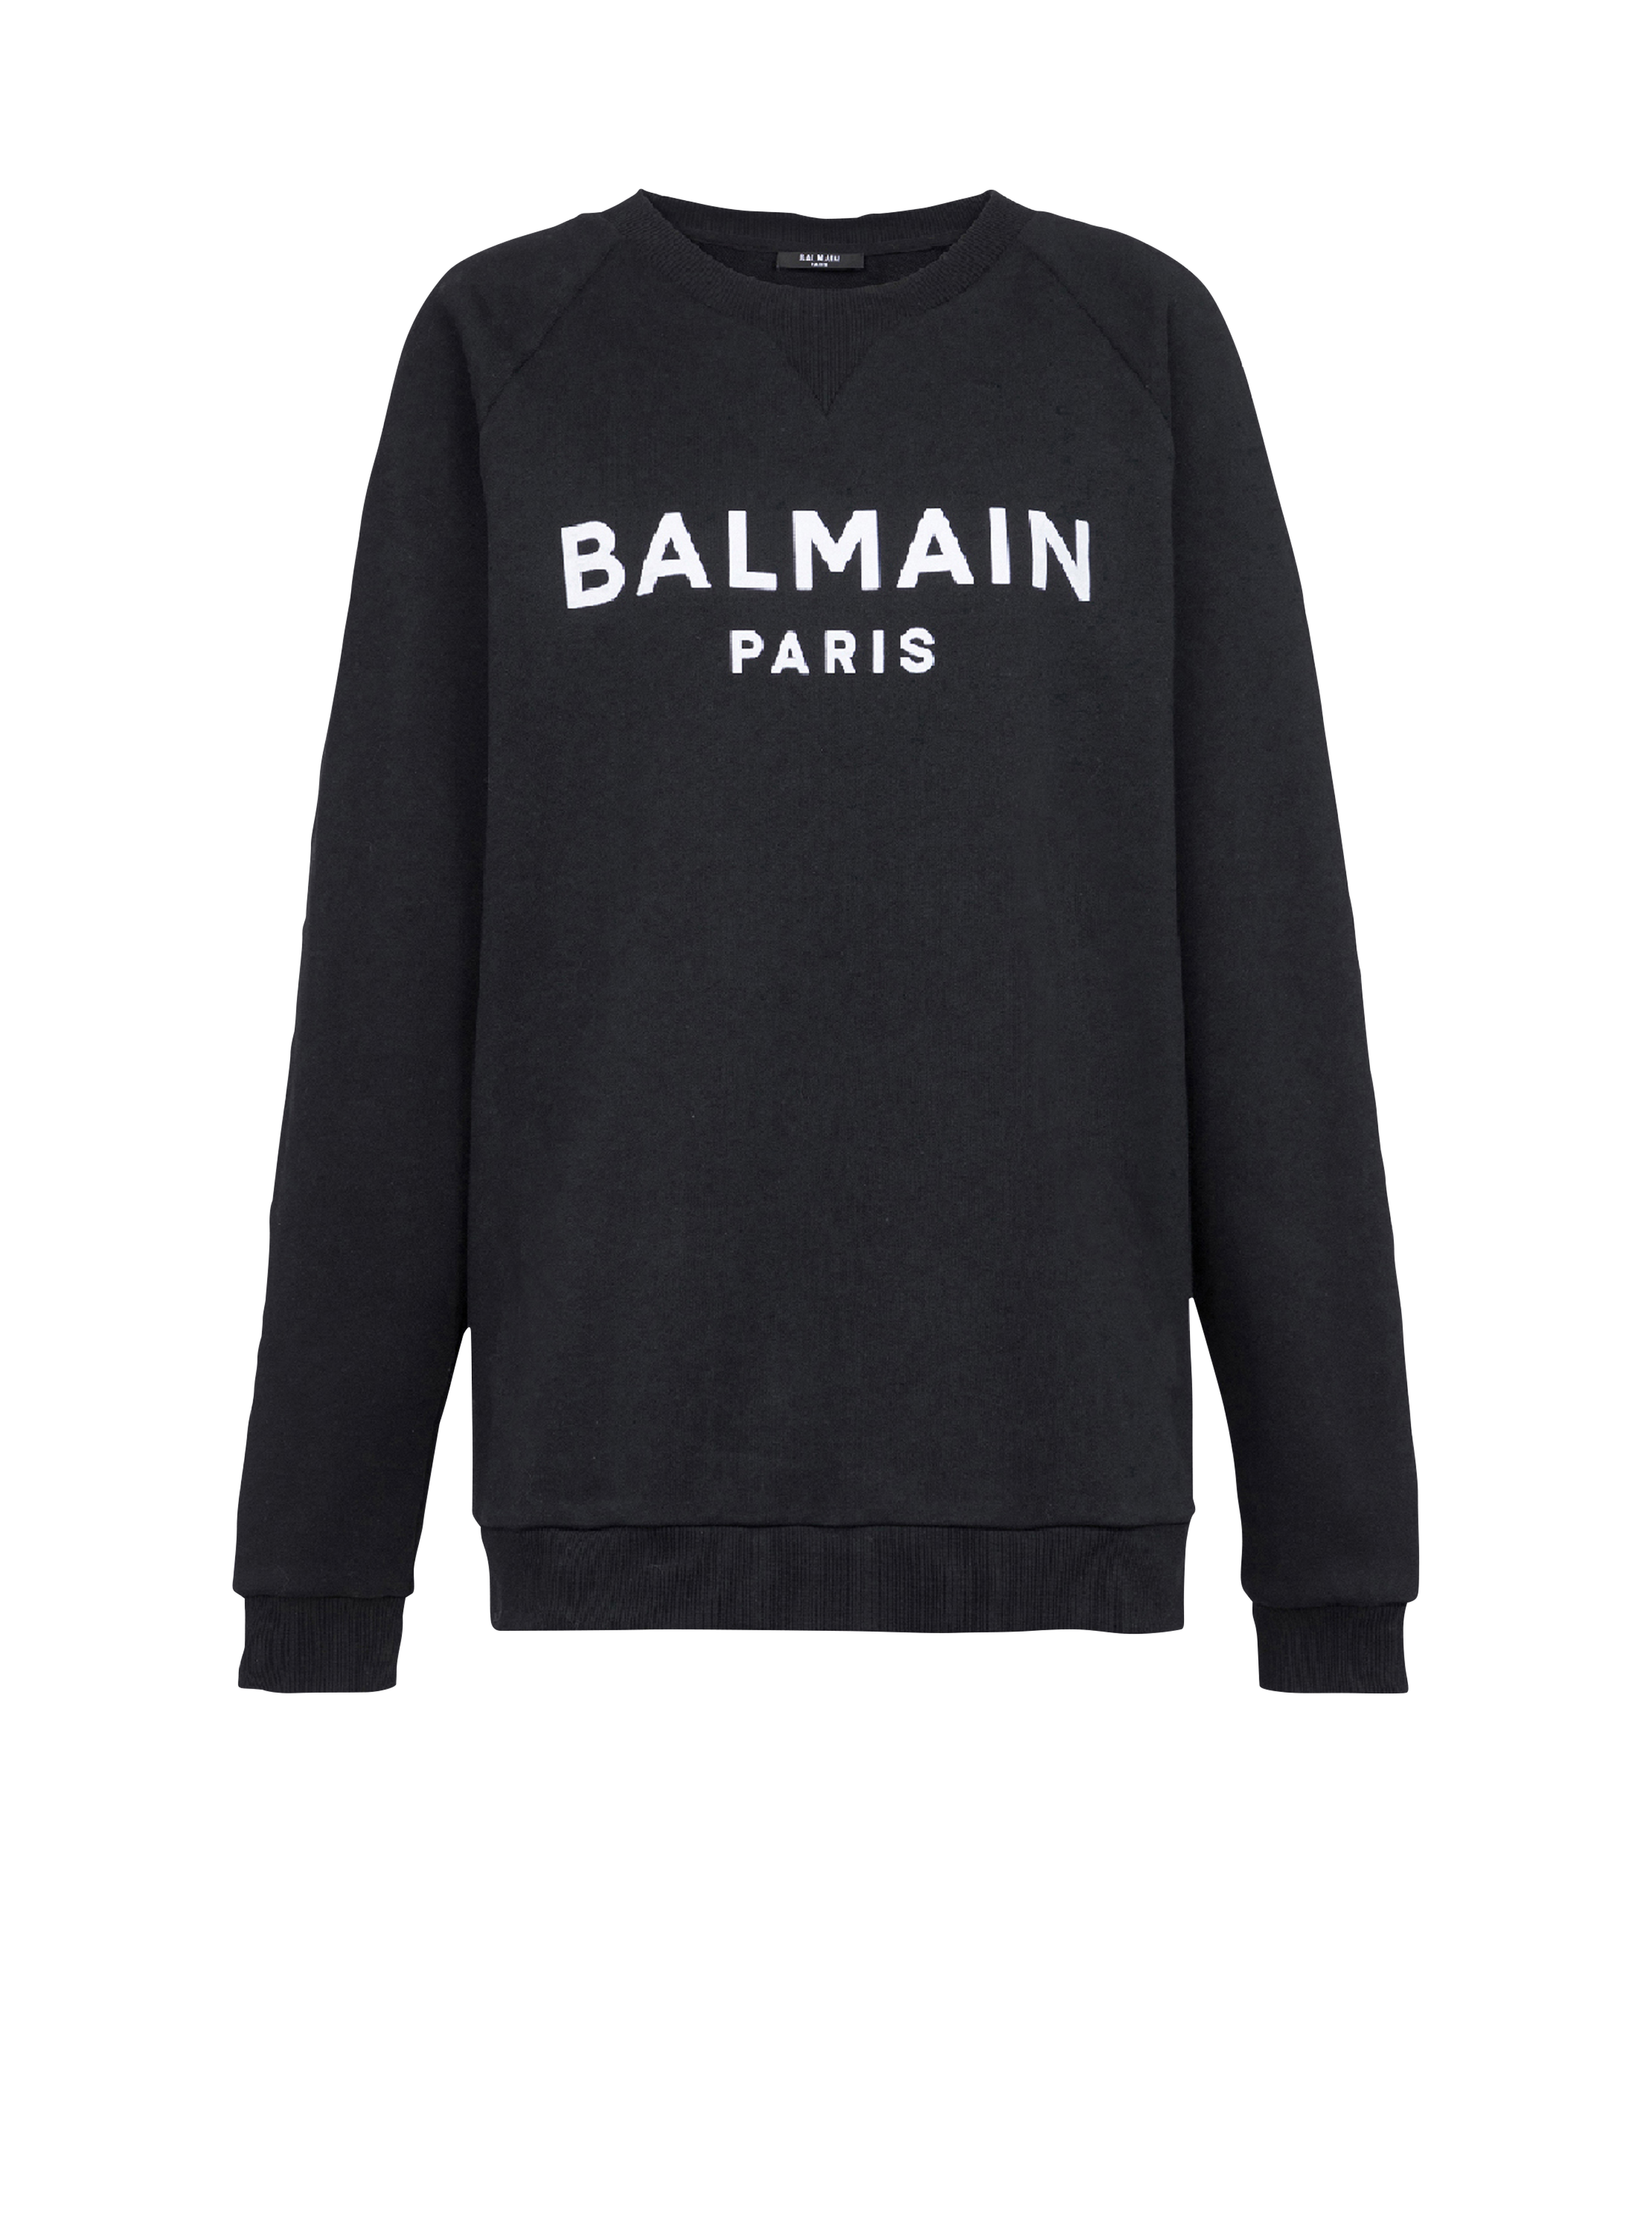 Sweat en coton avec logo imprimé Balmain, noir